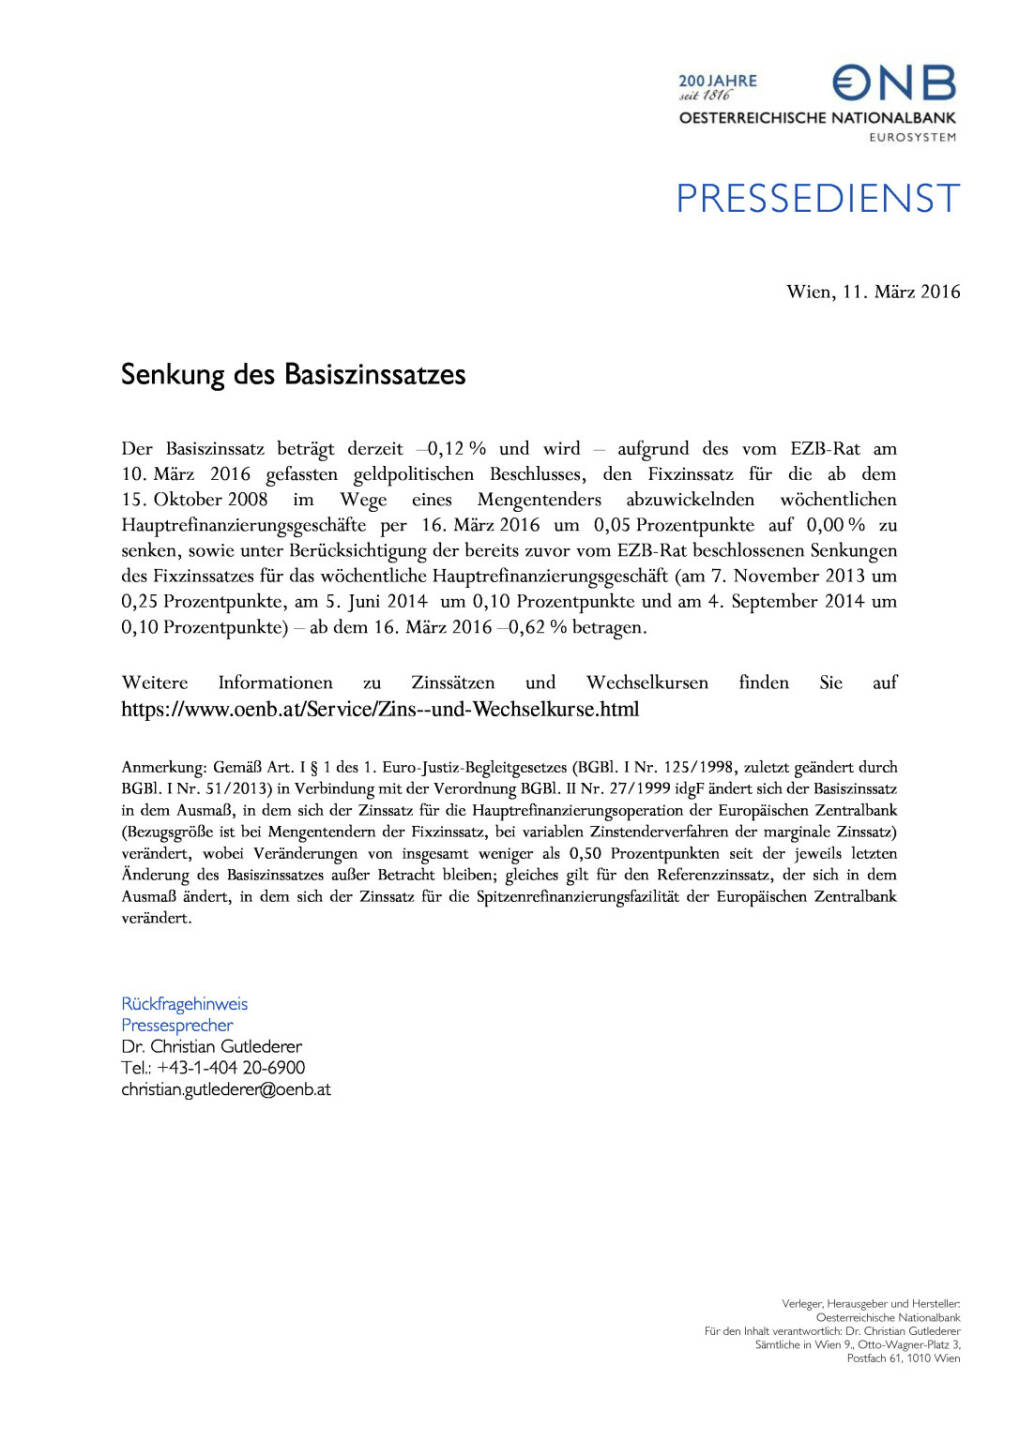 OeNB: Senkung des Basiszinssatzes, Seite 1/1, komplettes Dokument unter http://boerse-social.com/static/uploads/file_769_oenb_senkung_des_basiszinssatzes.pdf